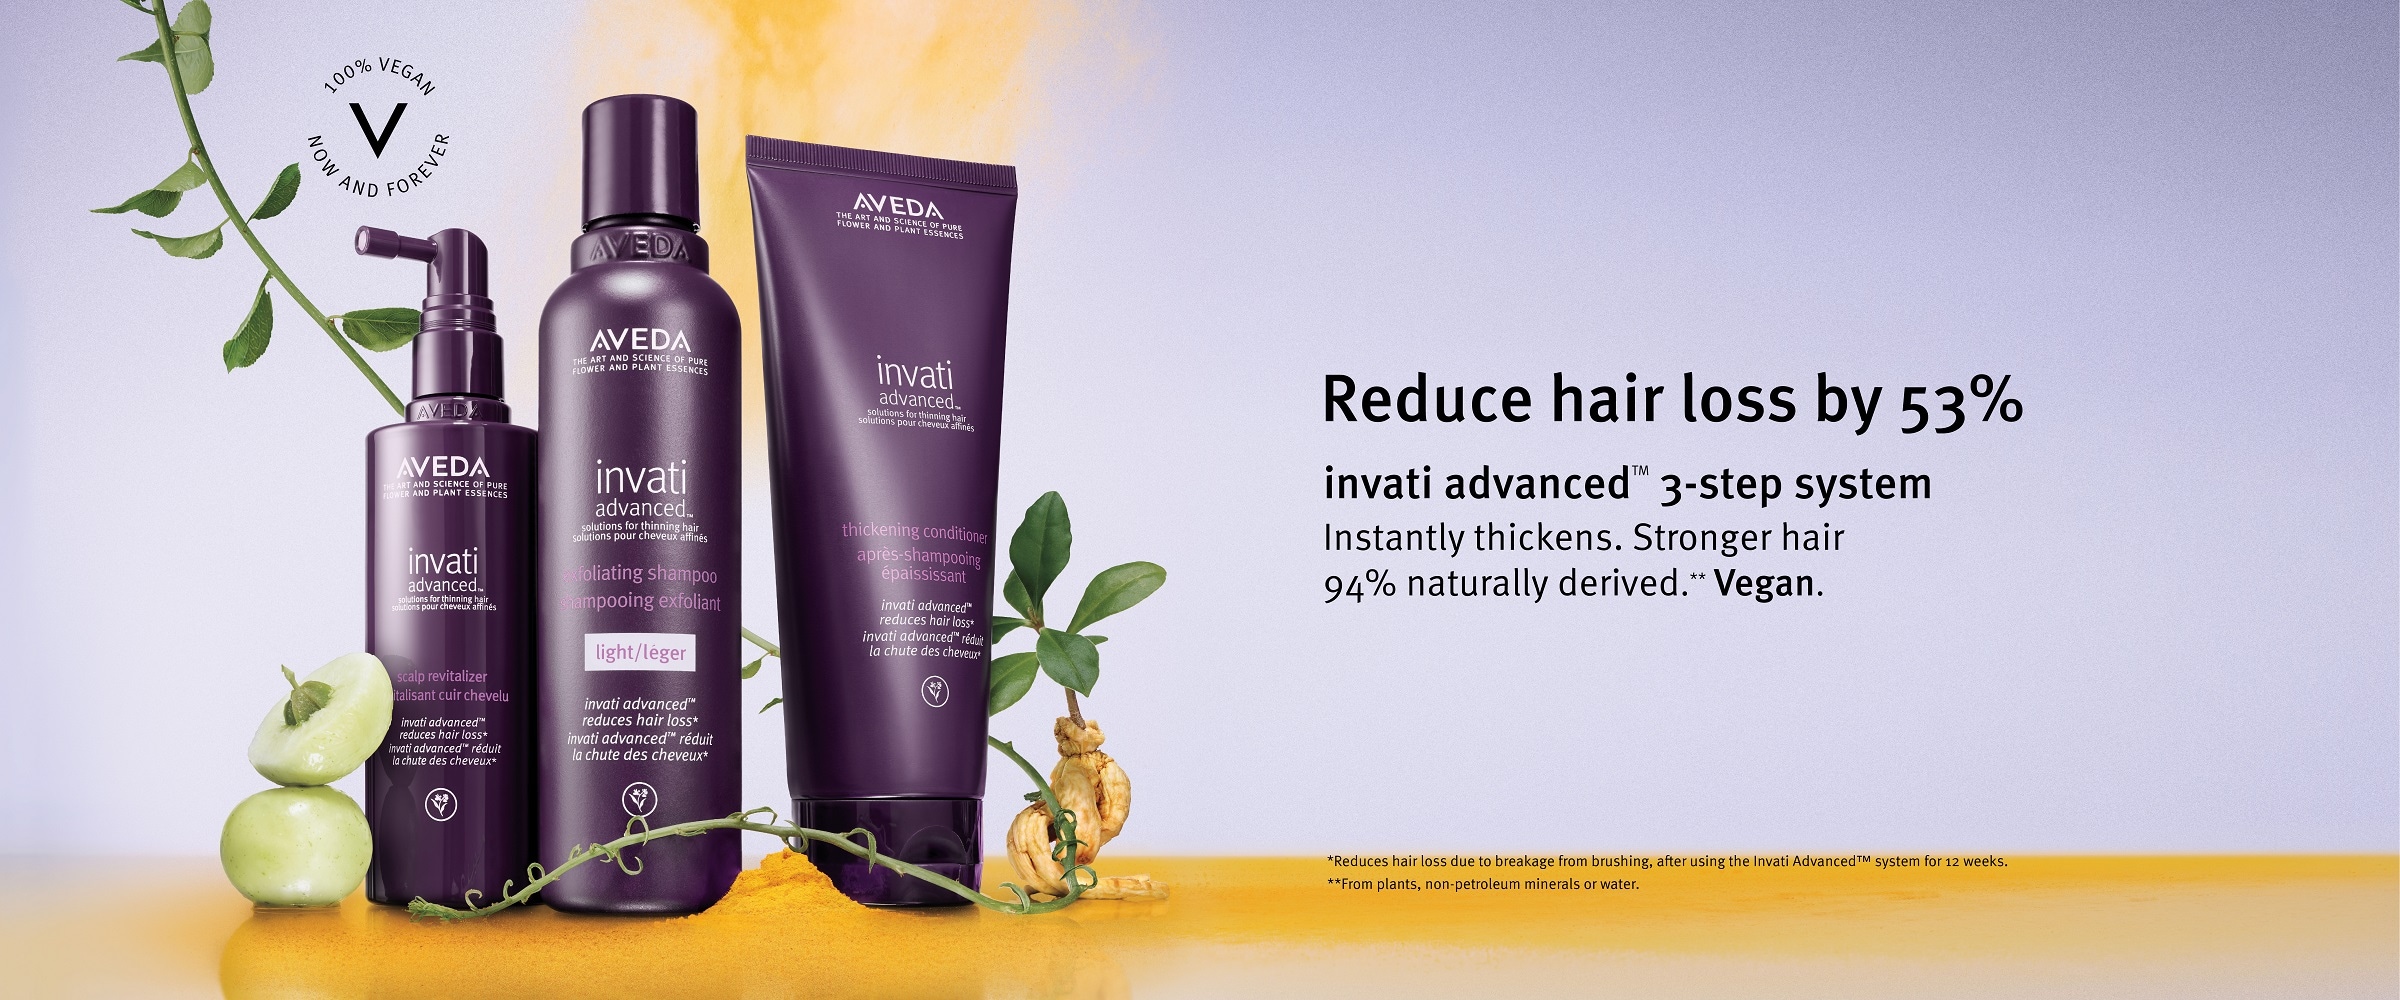 Reduce hair loss by 53%